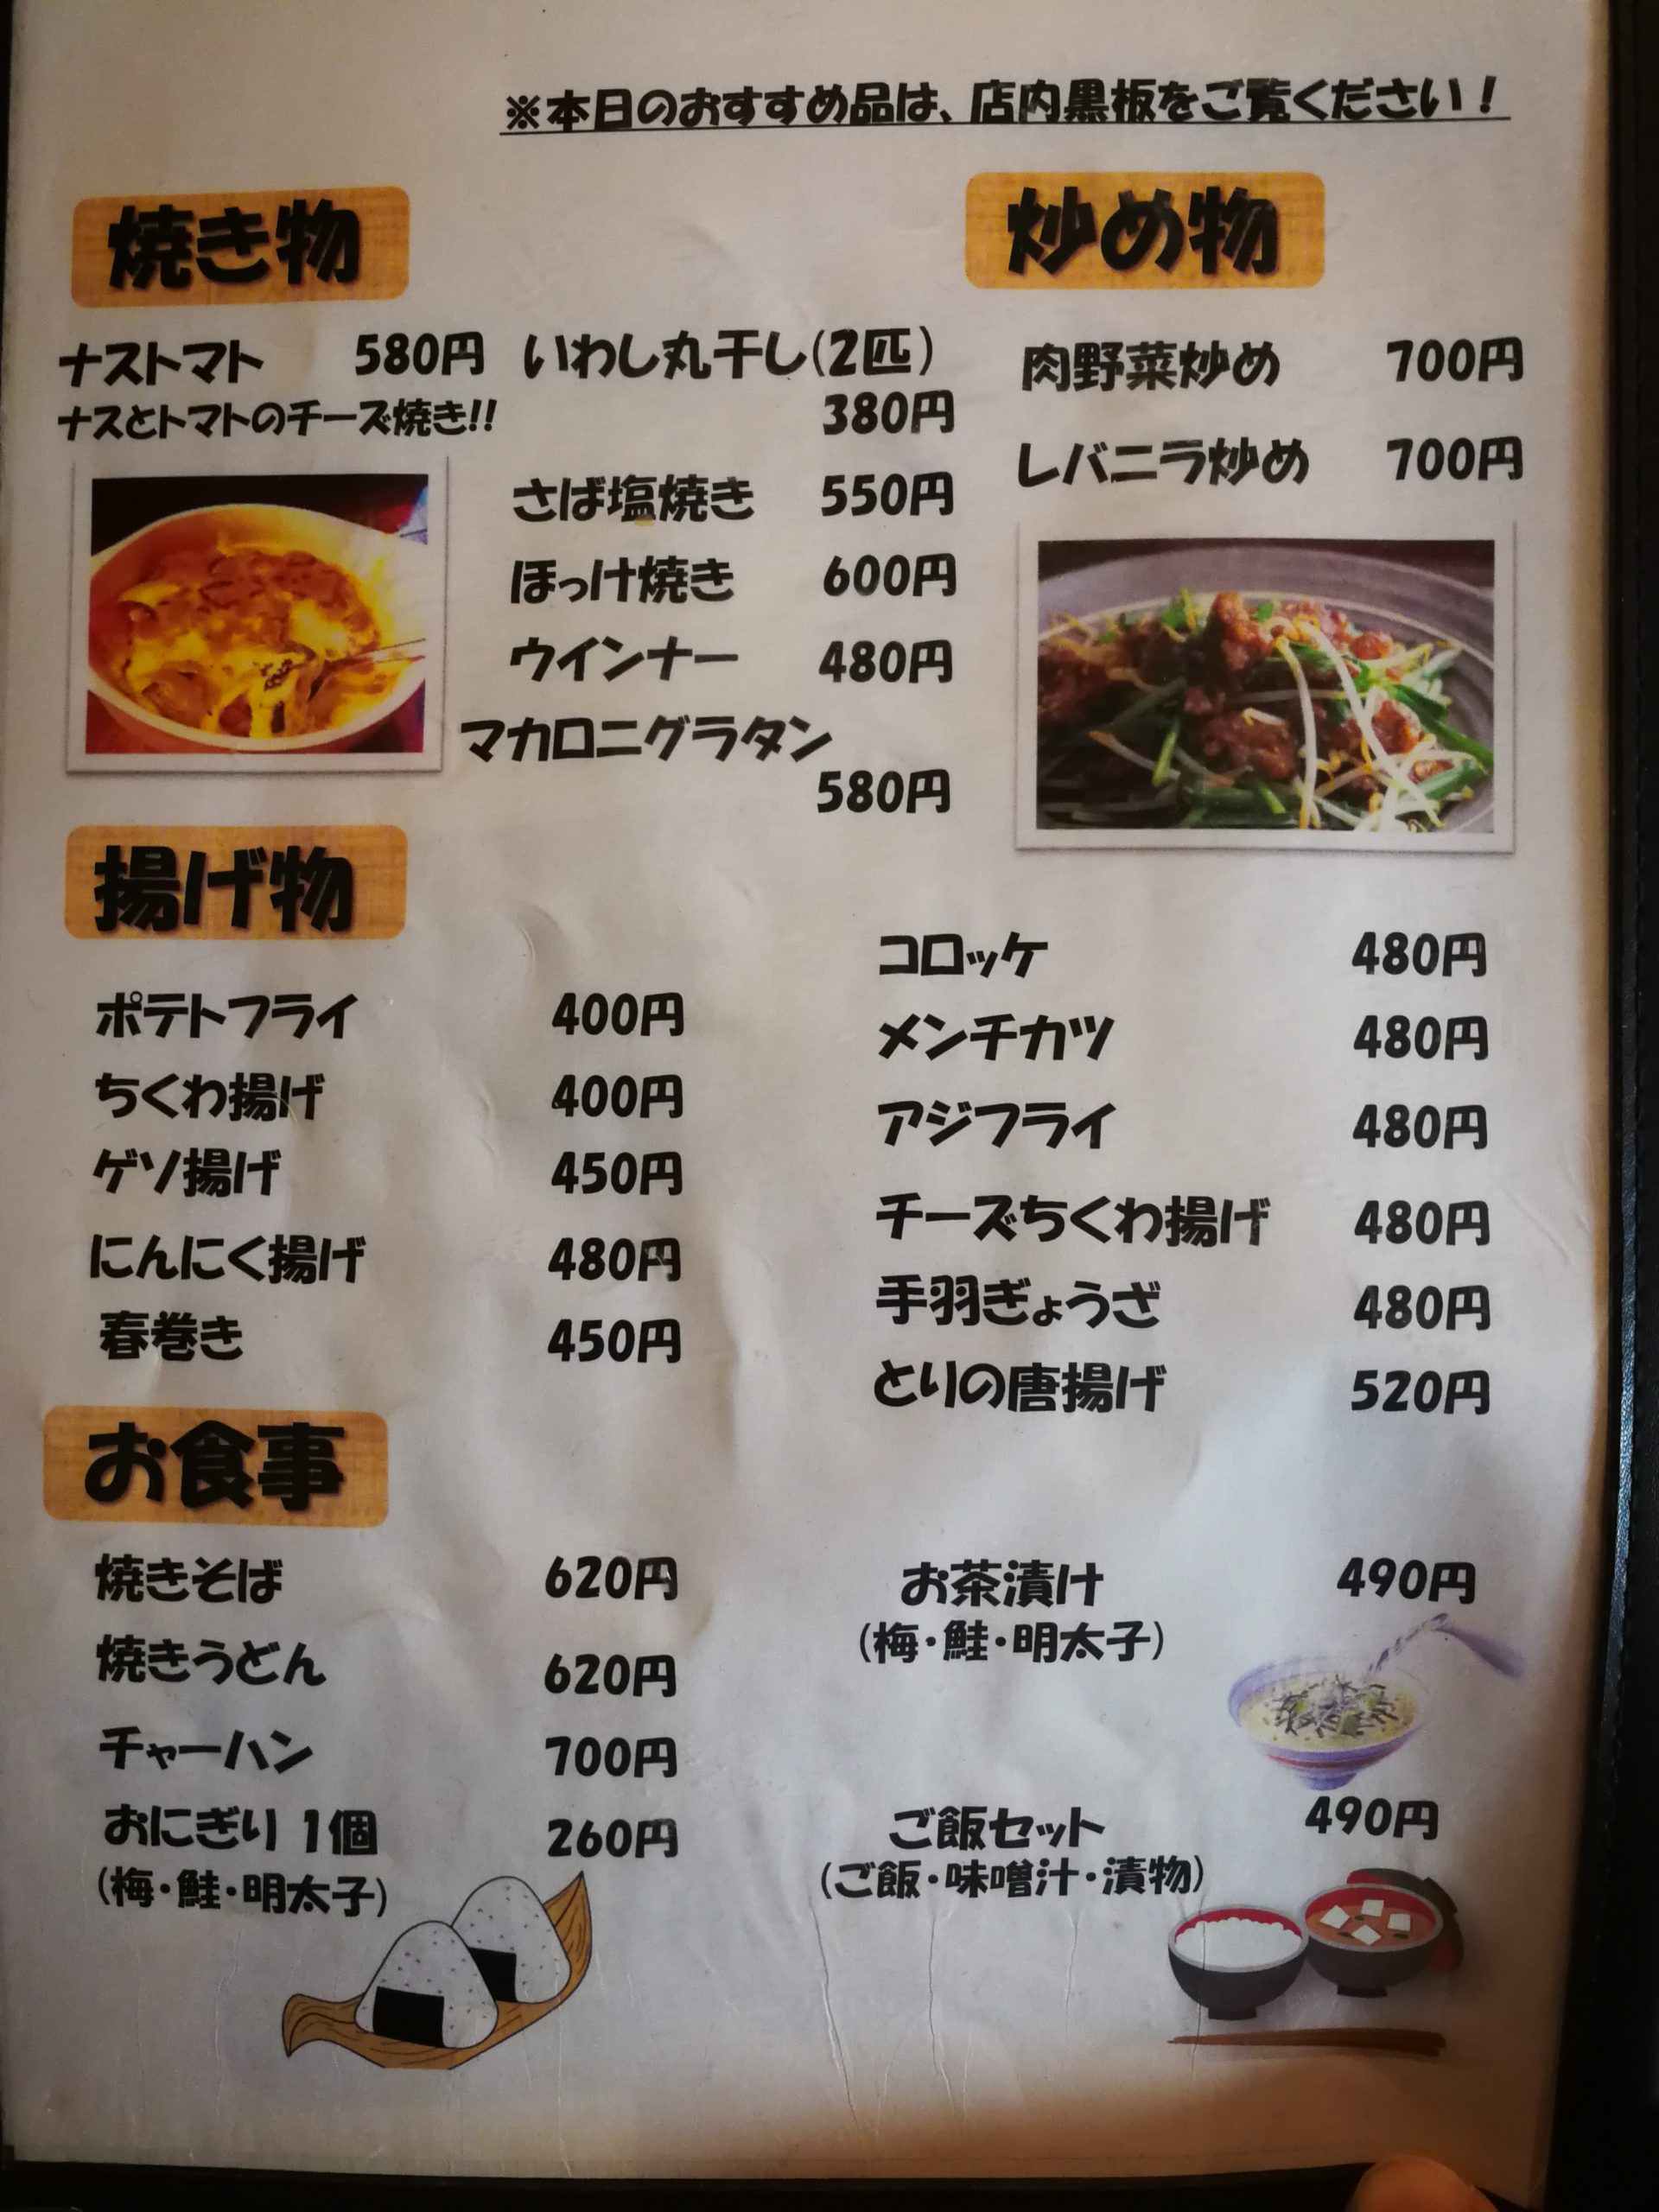 kikuya-sengawa-menu-05